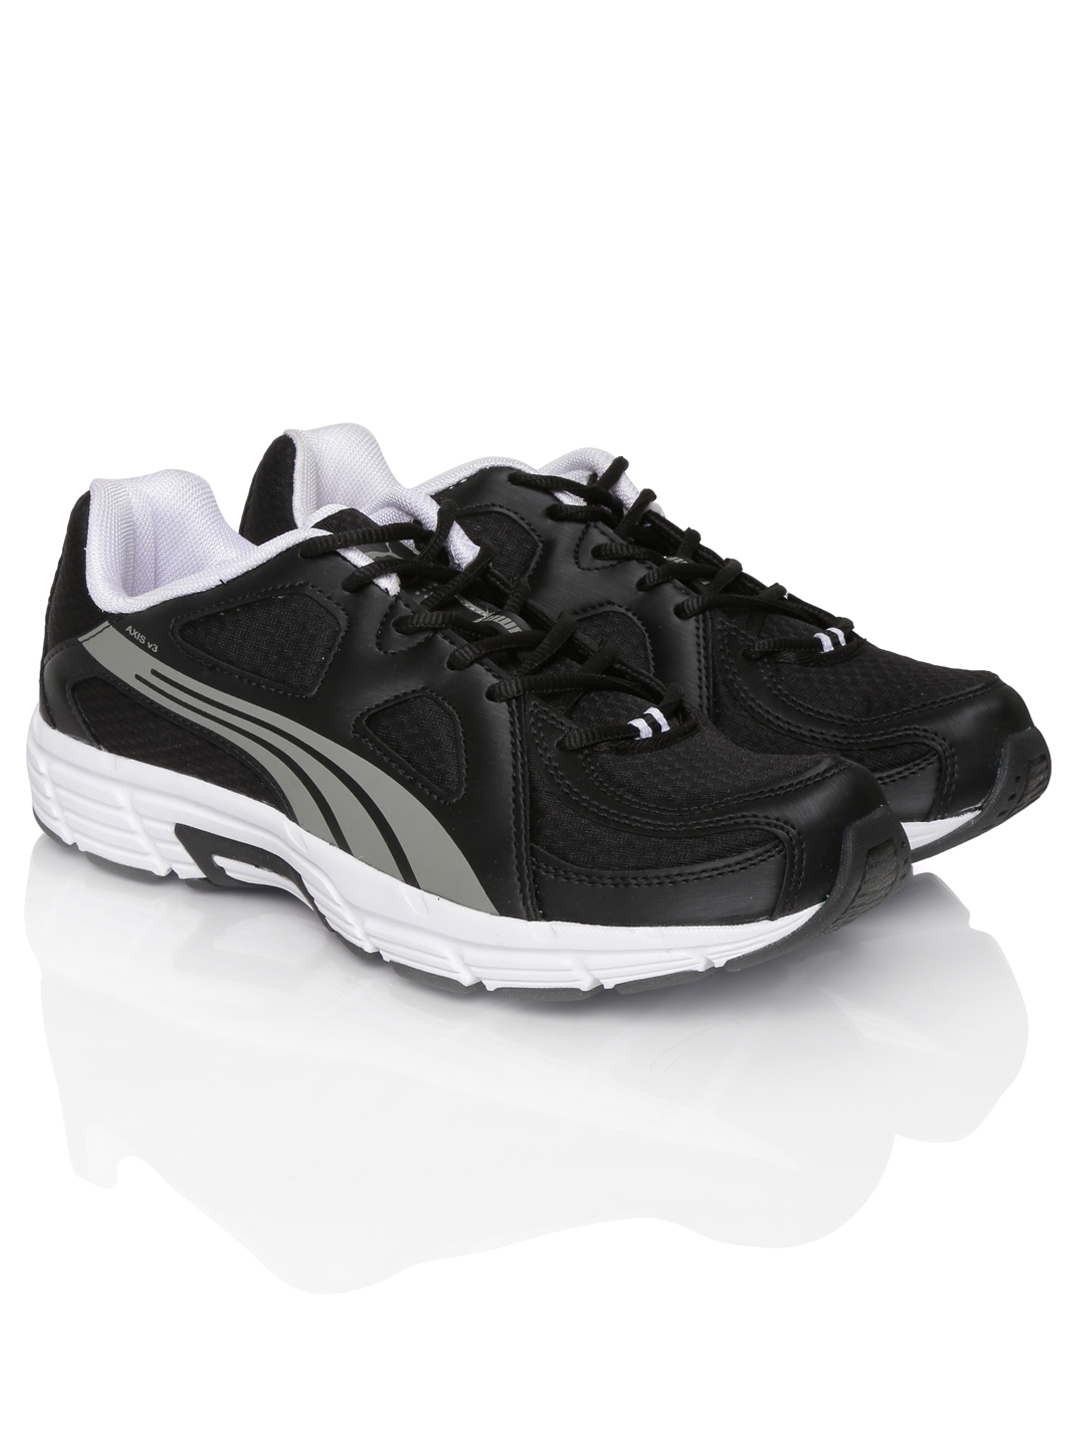 Buy Puma Men Black Axis V3 Ind Sports Shoes - for Men 317110